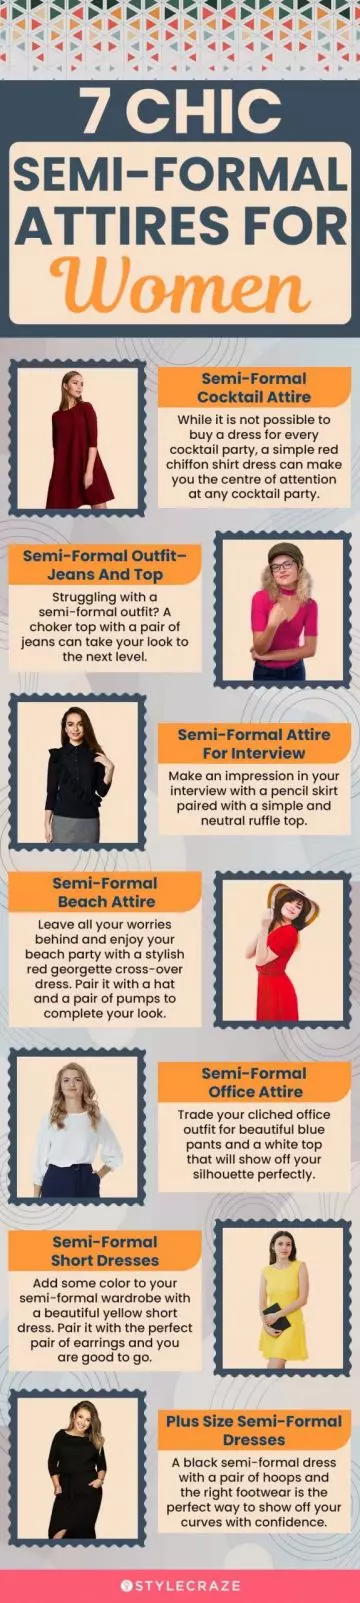 7 chic semi formal attires for women (infographic)